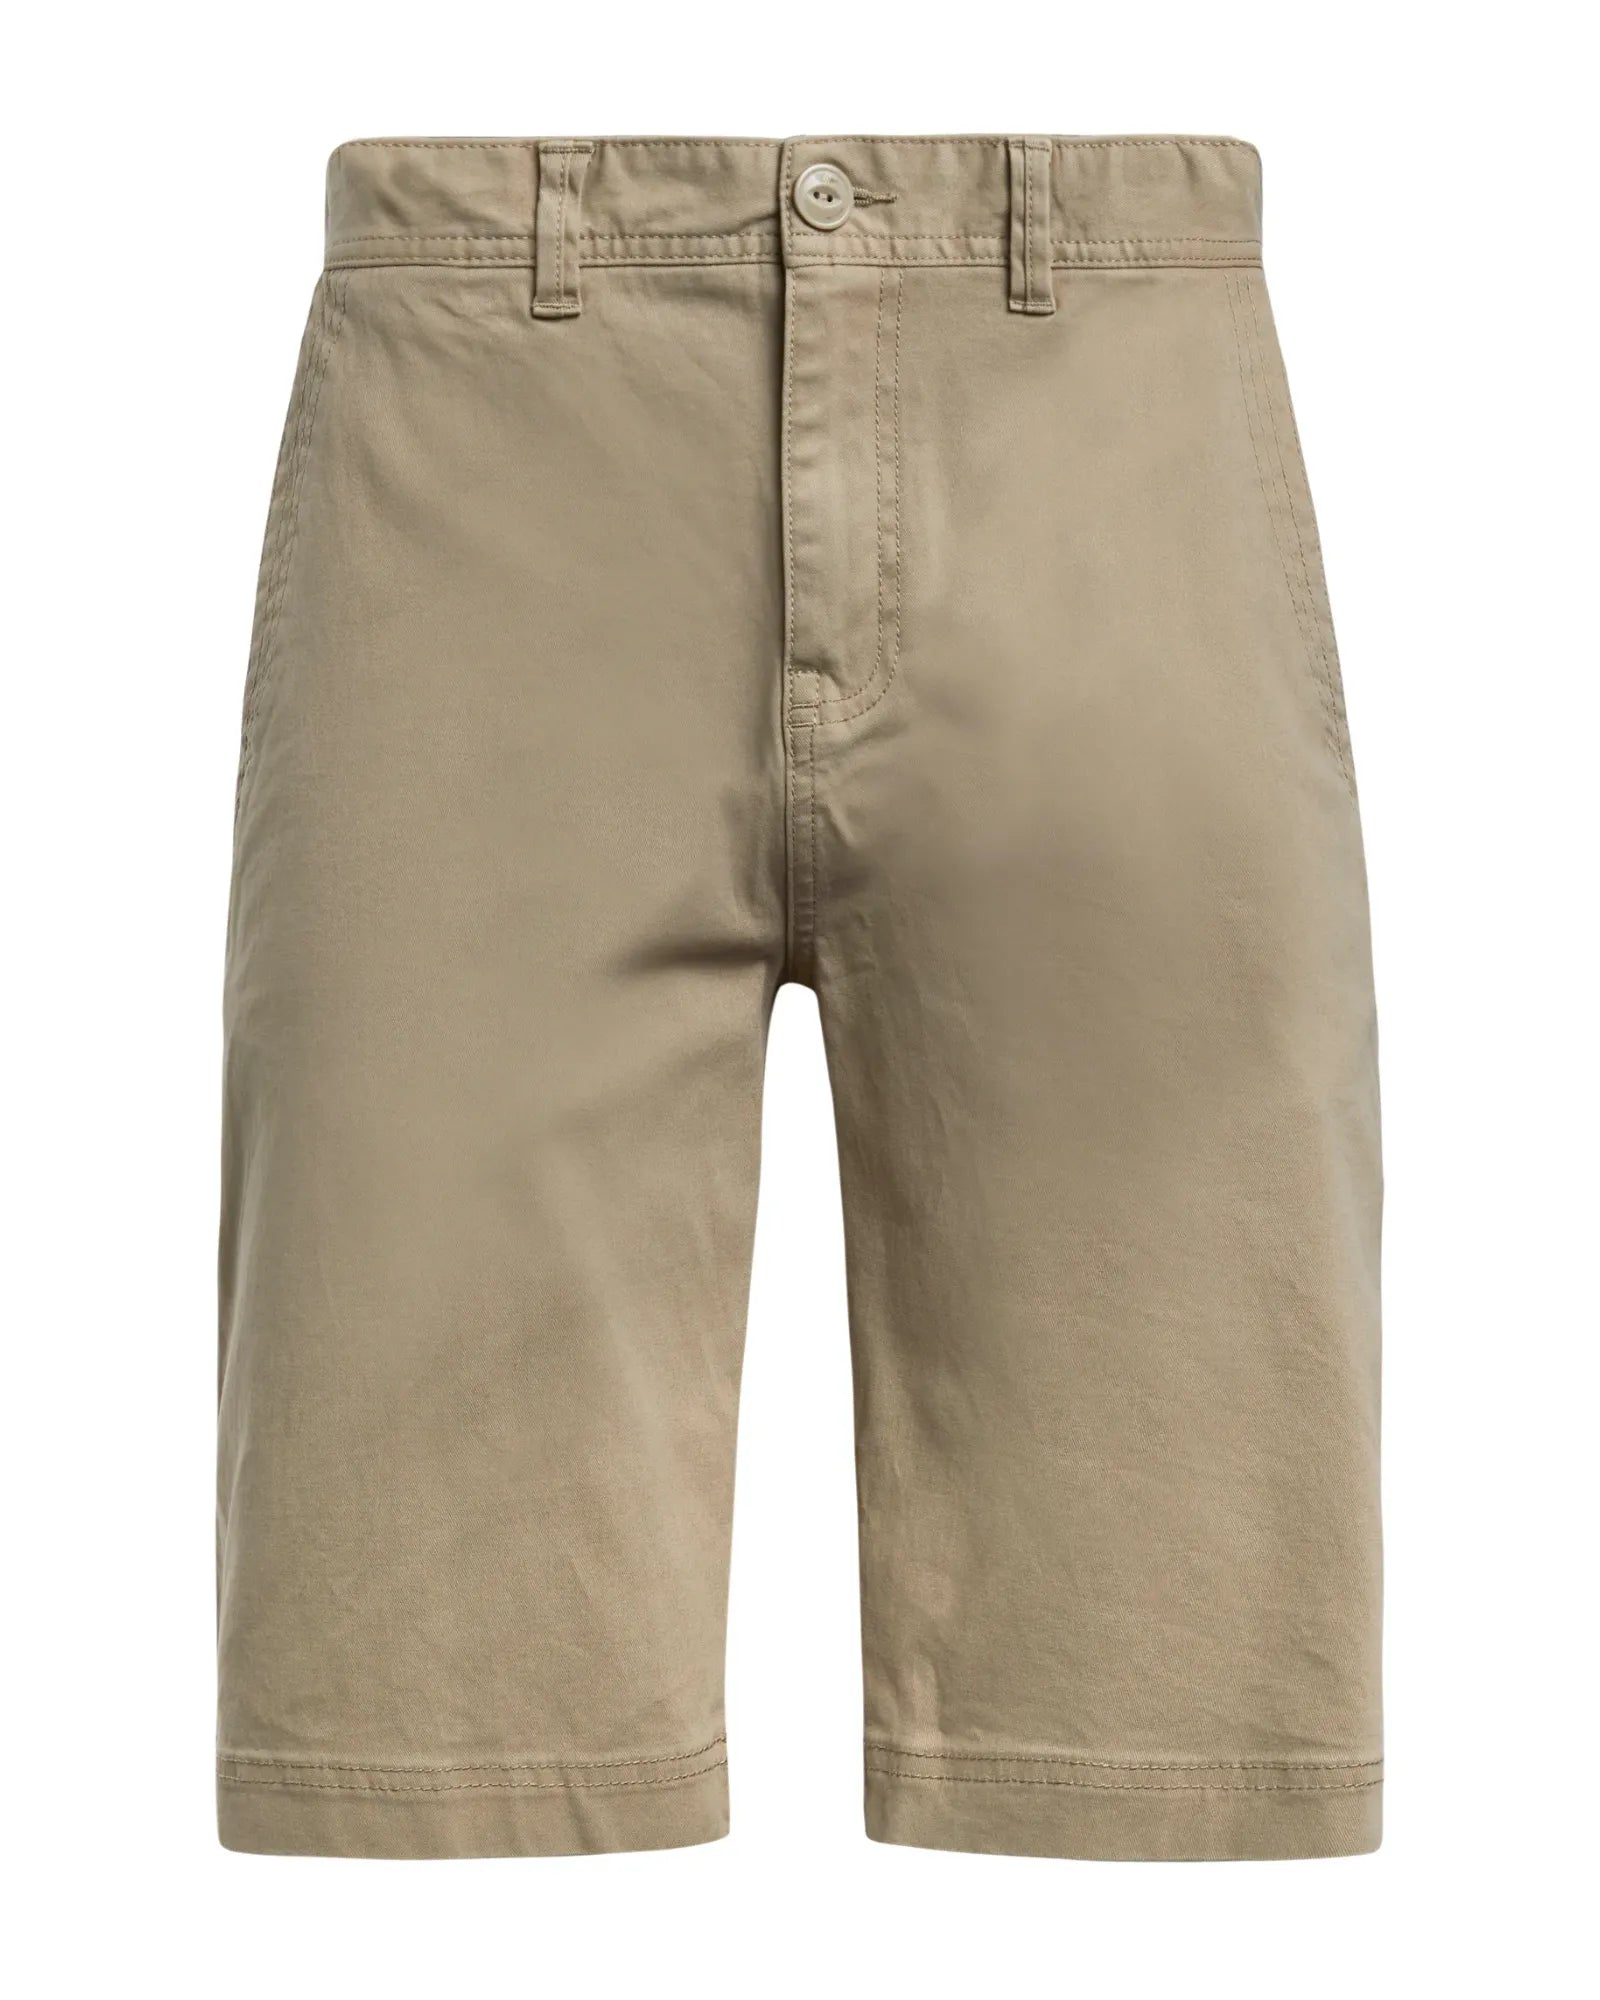 Rayburn Organic Cotton Flat Front Shorts - Taupe Grey